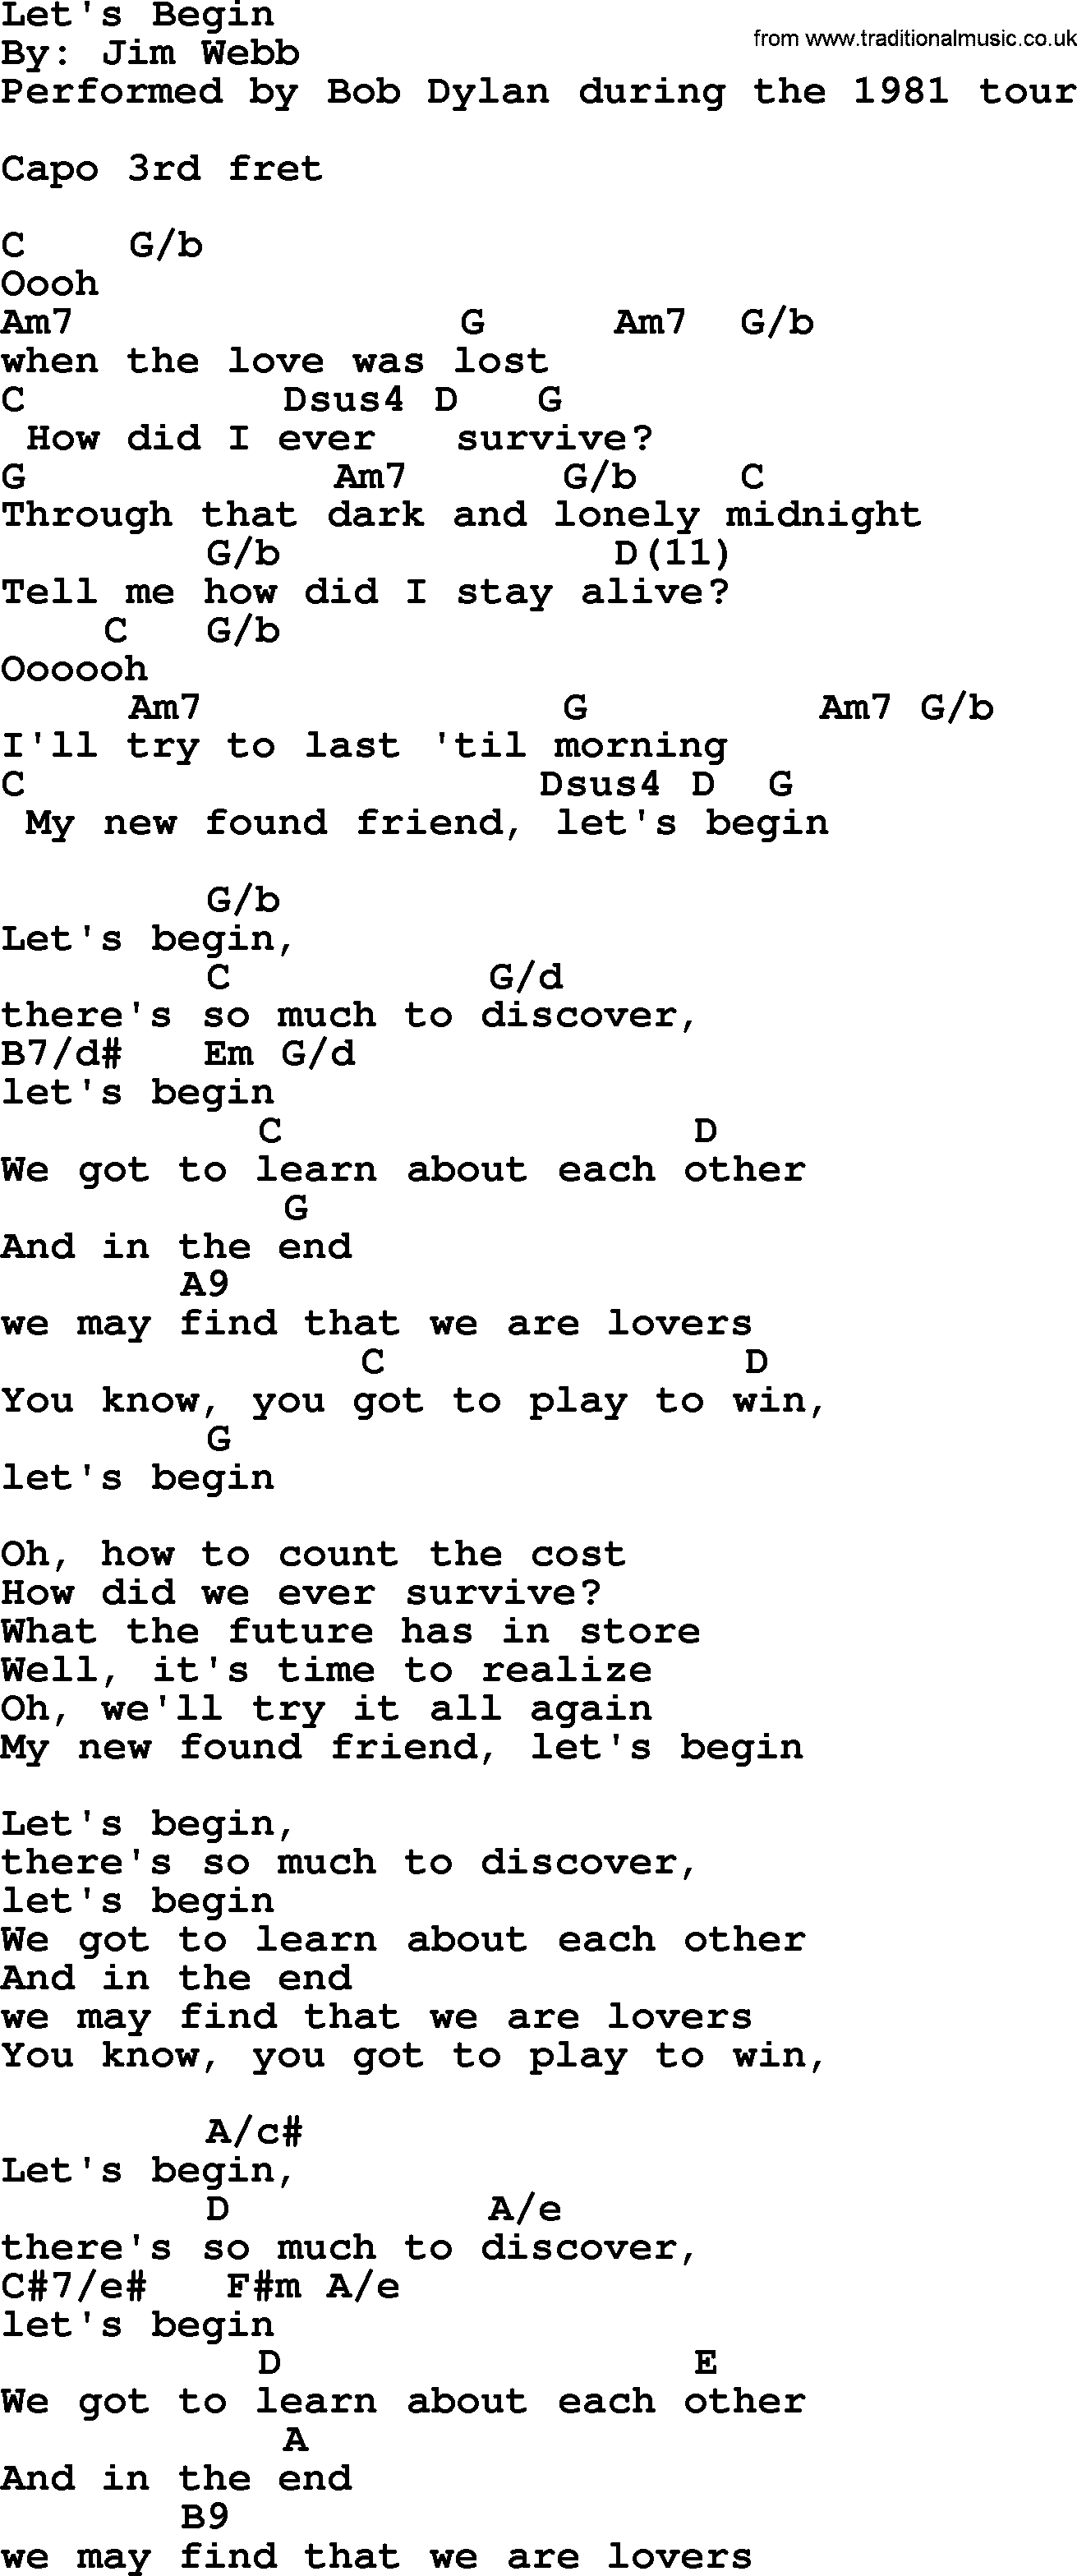 Bob Dylan song, lyrics with chords - Let's Begin